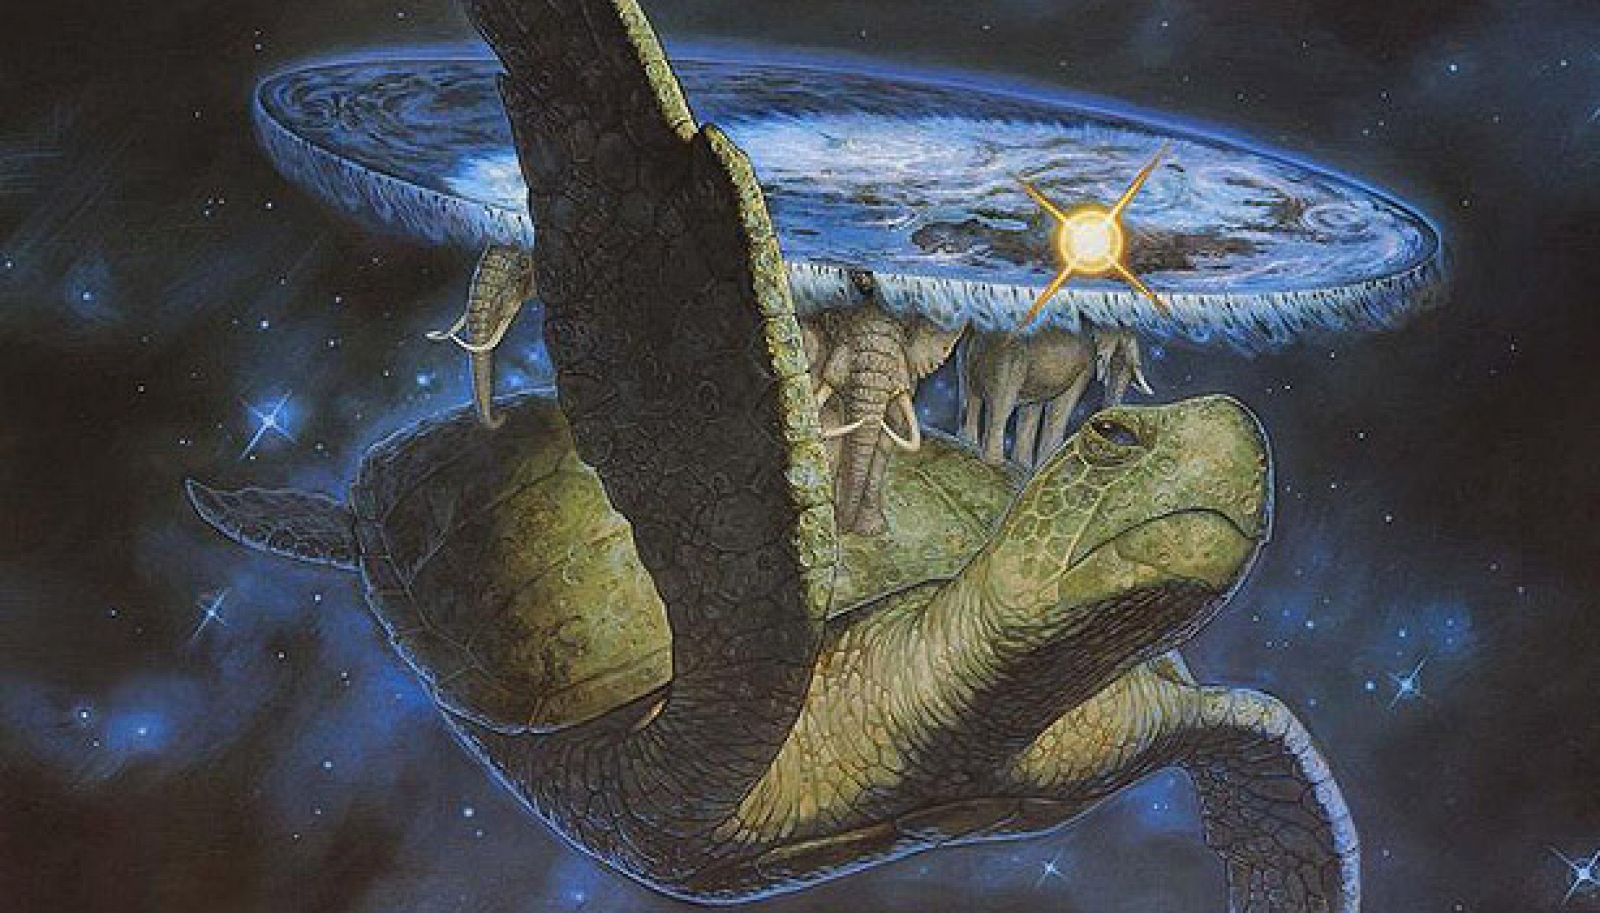 Espectaular versión de Paul Kidby de "Mundodisco", el planeta imaginario que sirve de escenario a la saga homónima de novelas escrita por Terry Pratchet